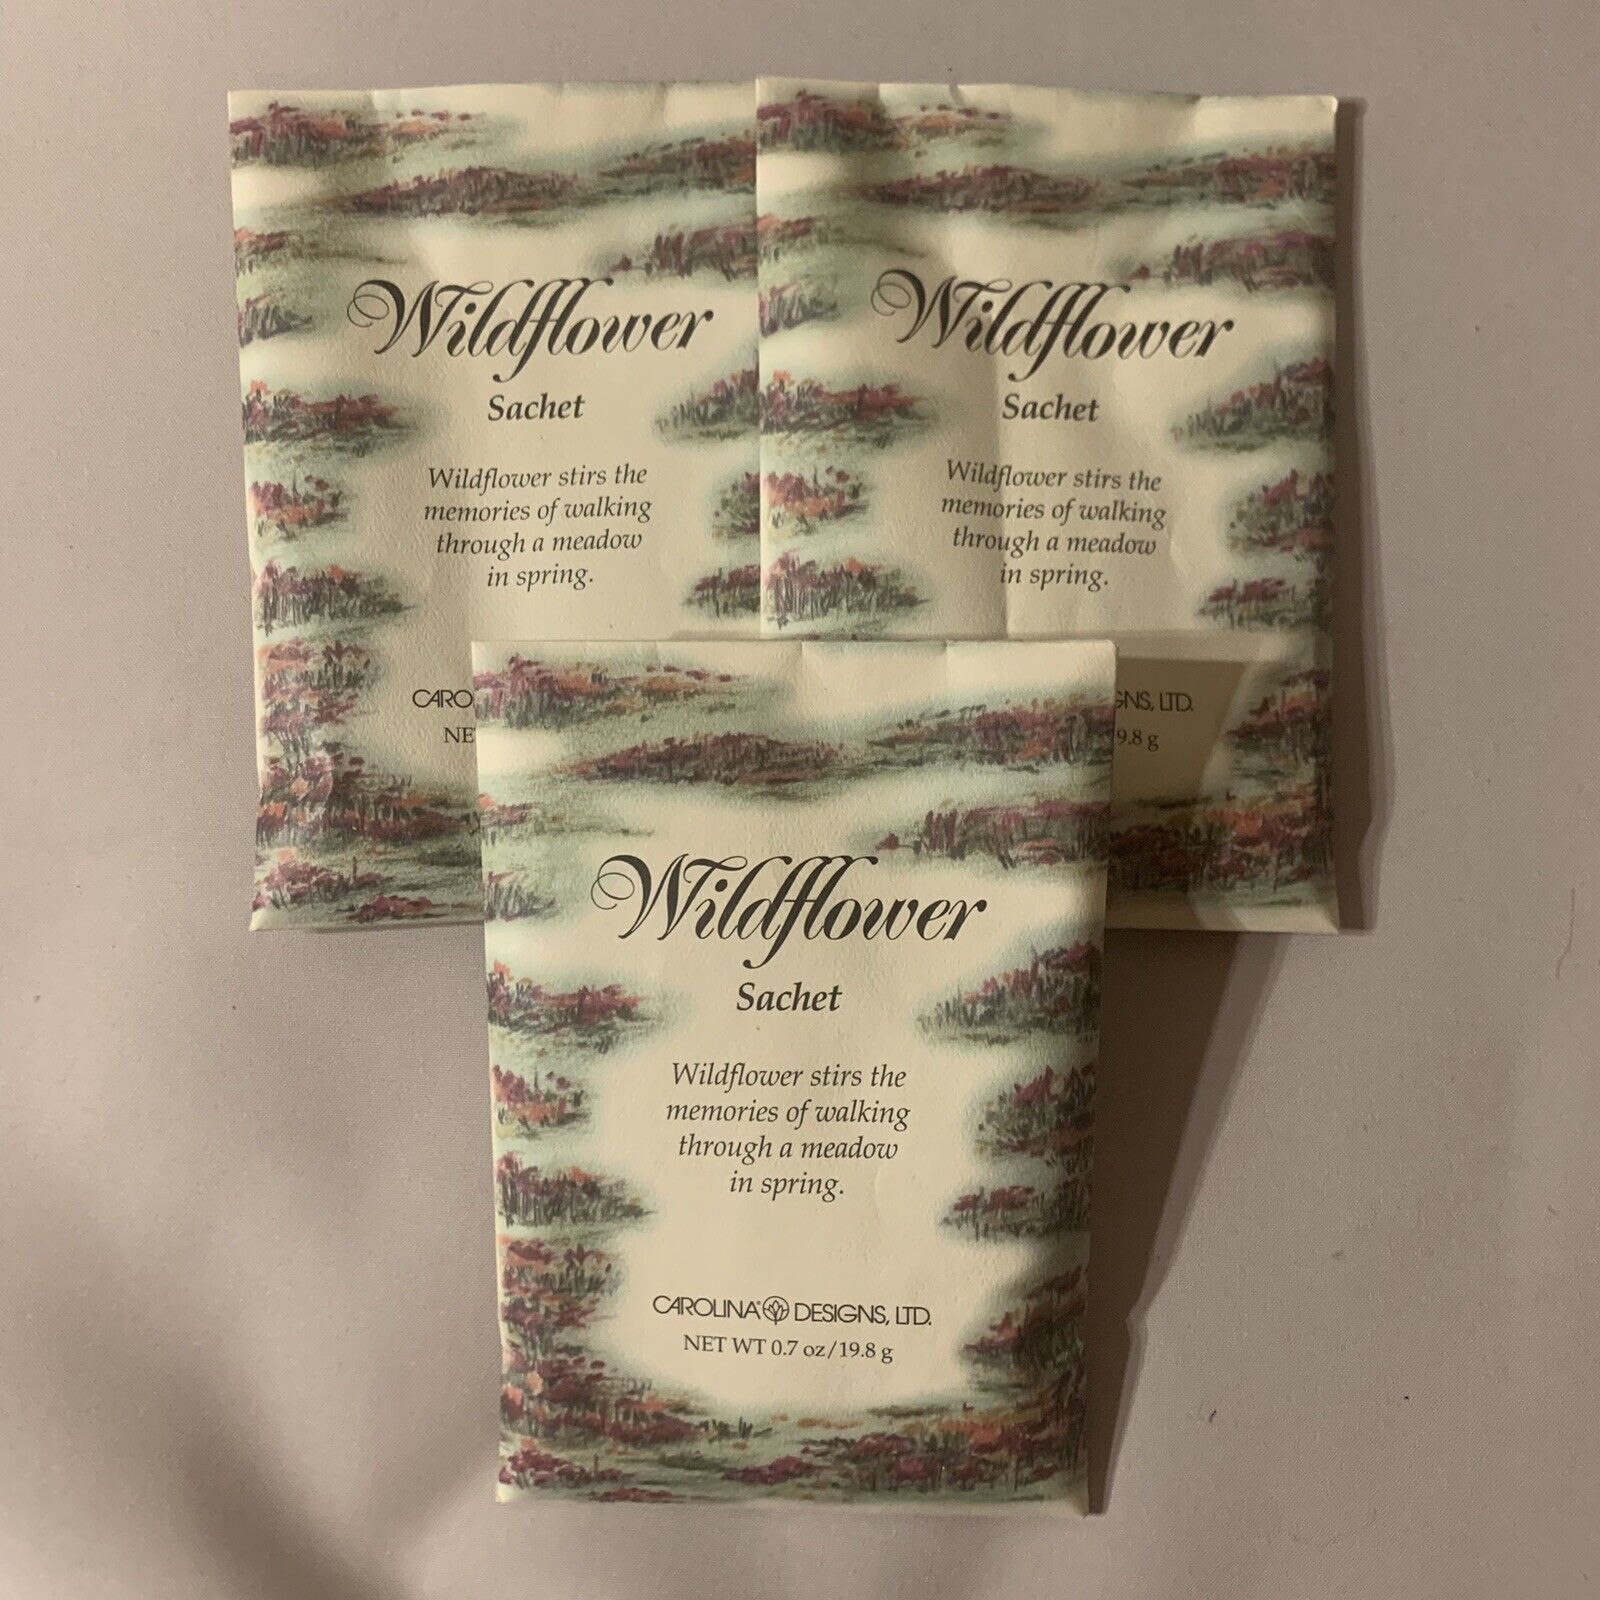 (3) New Carolina Designs Ltd. Wildflower Sachet 0.7 oz - $14.01